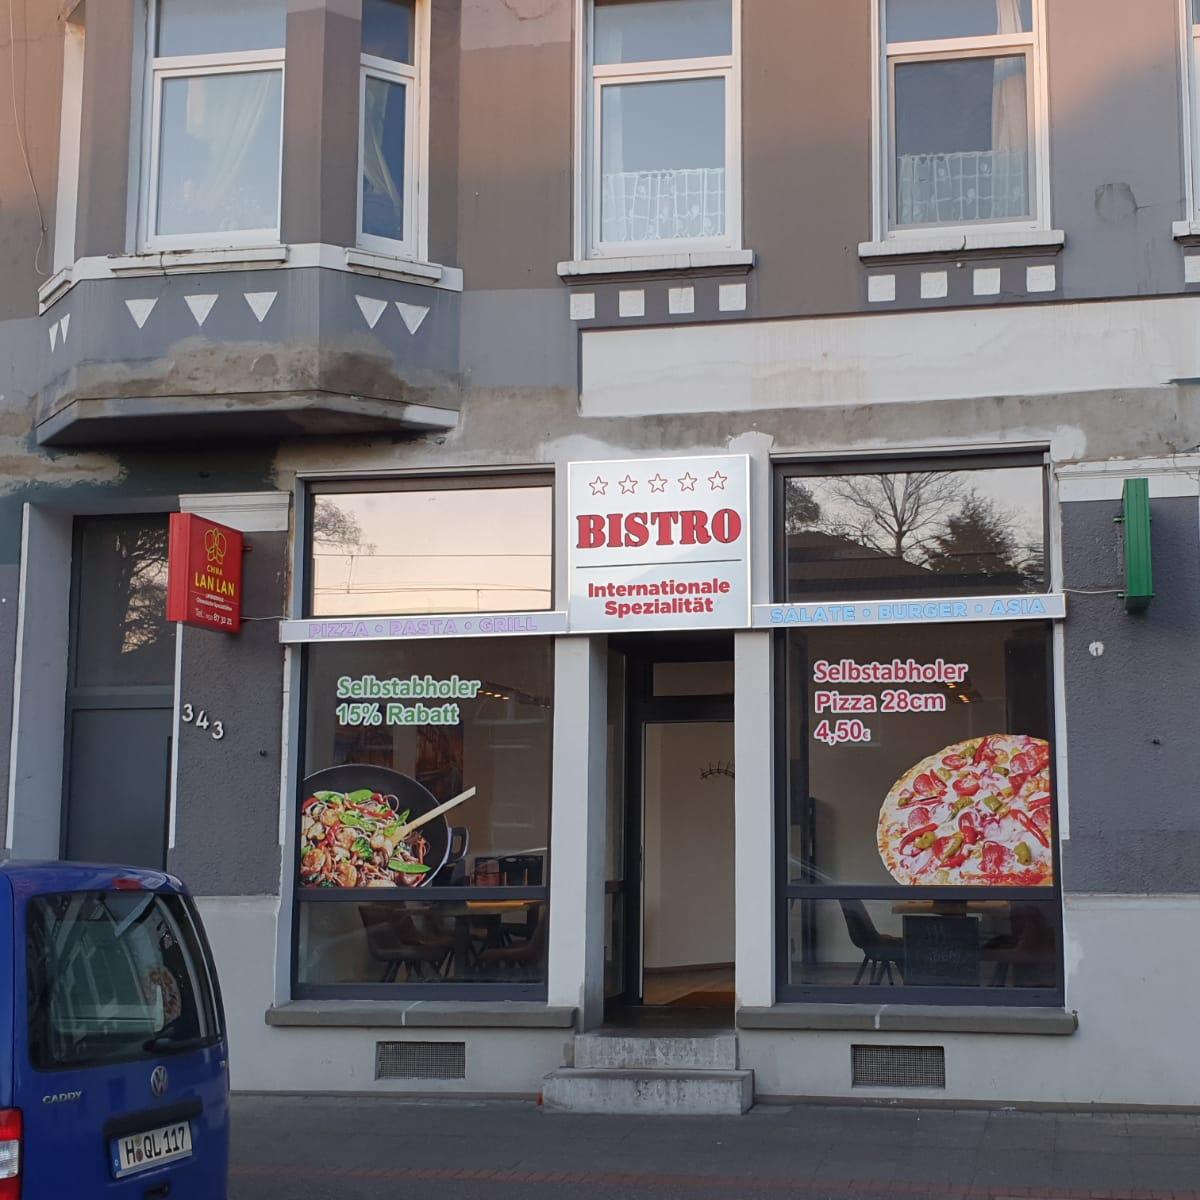 Restaurant "Pizzeria Maria" in Hannover